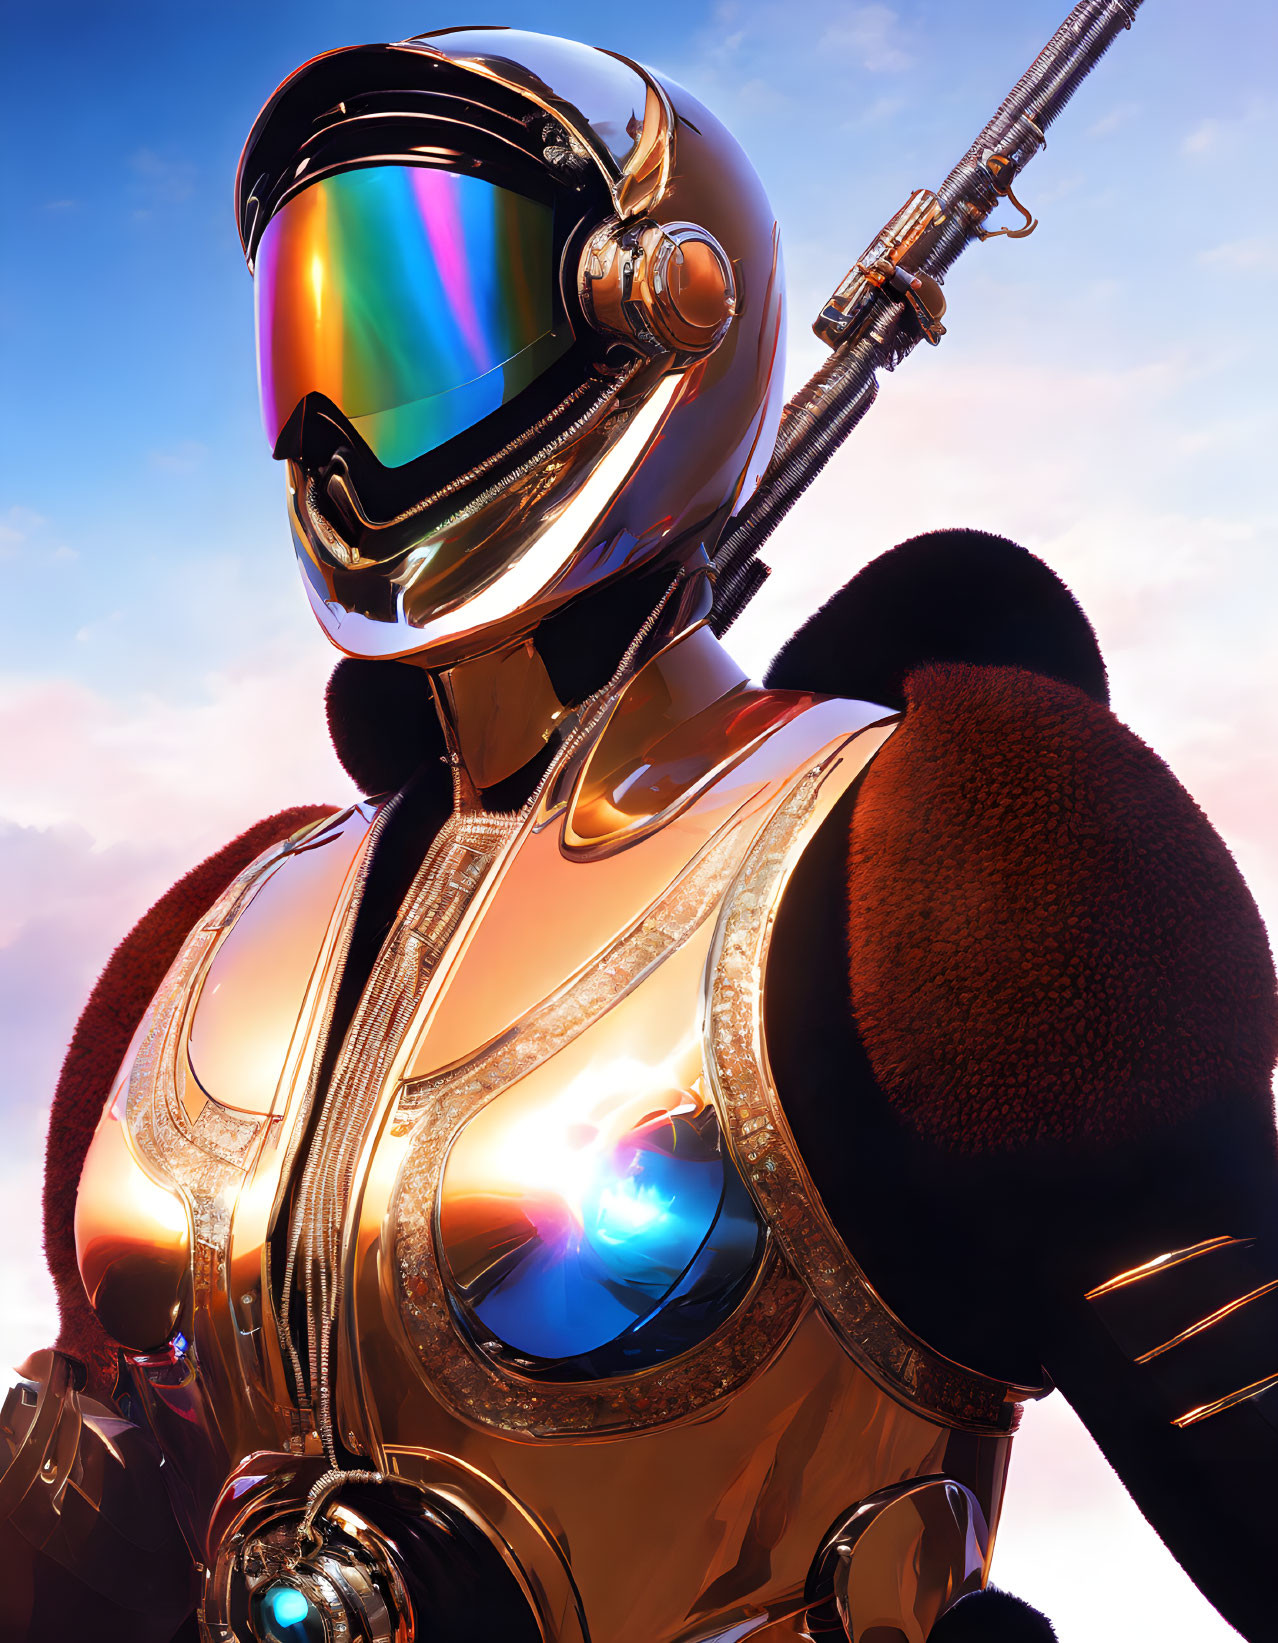 Futuristic gold-armored figure with rainbow visor helmet and high-tech rifle against cloudy sky